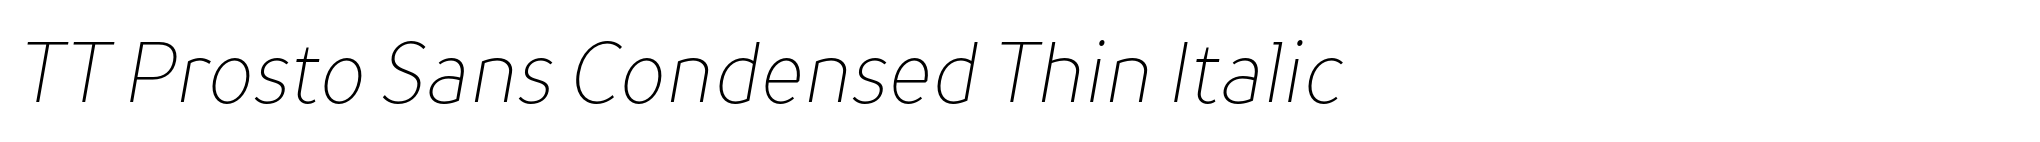 TT Prosto Sans Condensed Thin Italic image